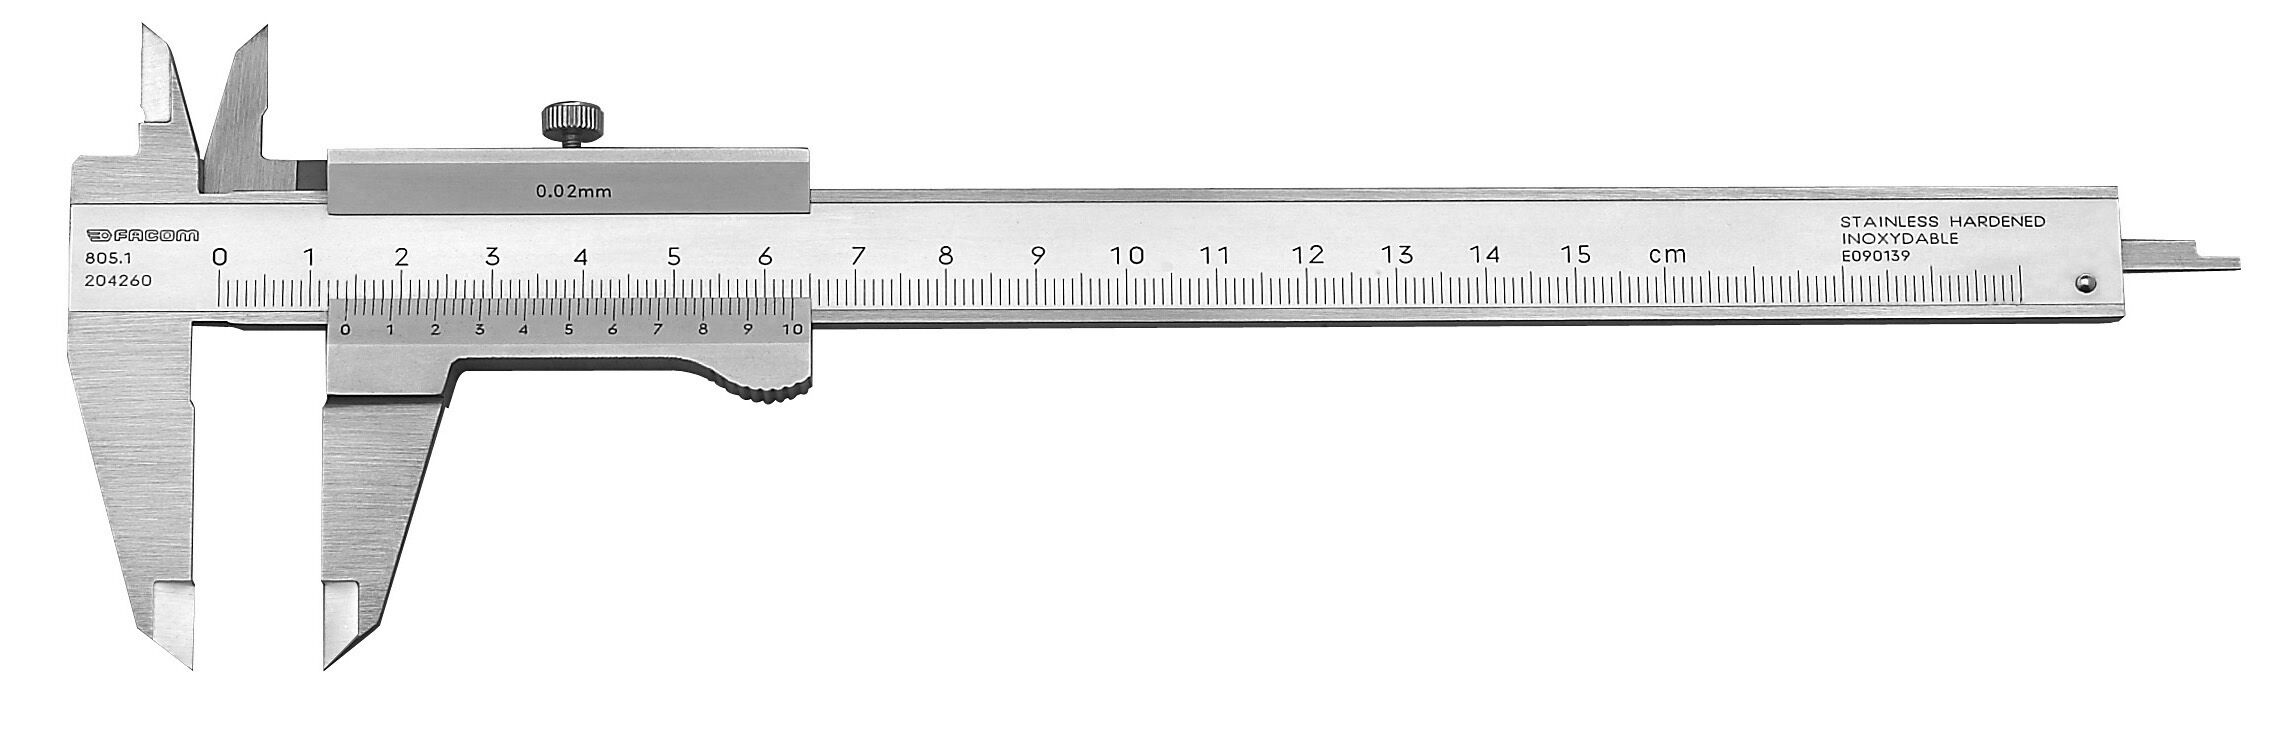 Caliper Gauge BGS 0 - 300 mm